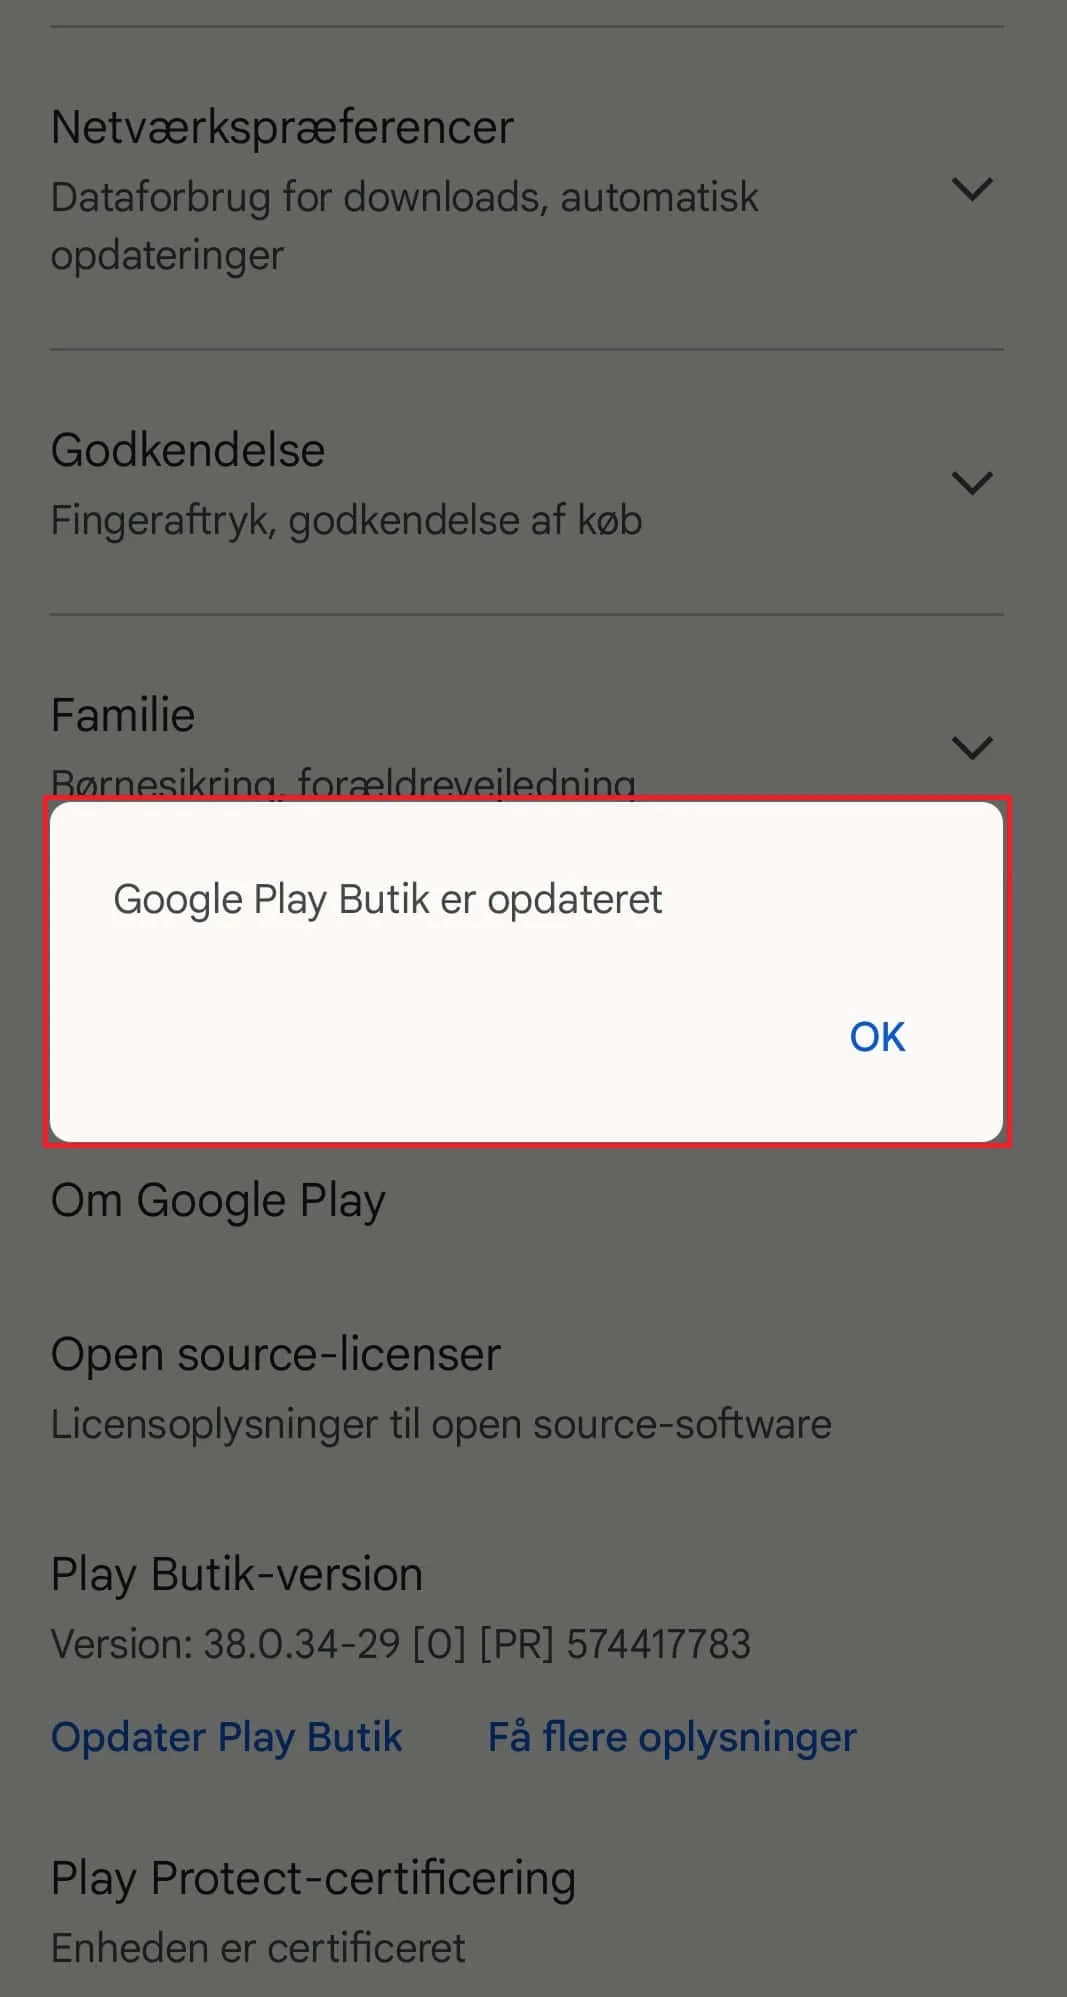 Google Play Butik-applikationen opdateres